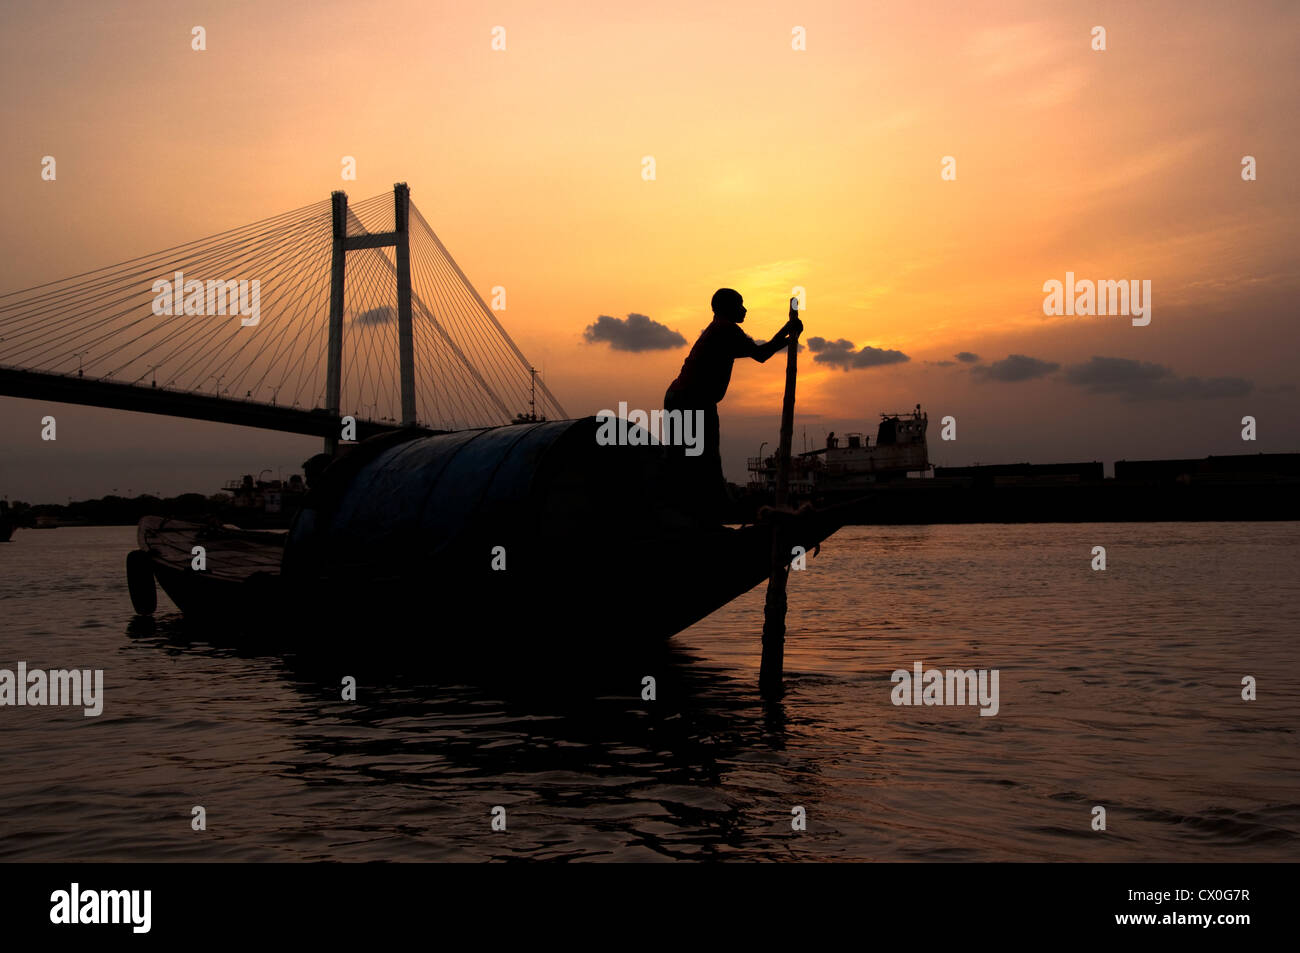 A boat man sails his boat at evening time over the river Ganges at Kolkata, India. Stock Photo